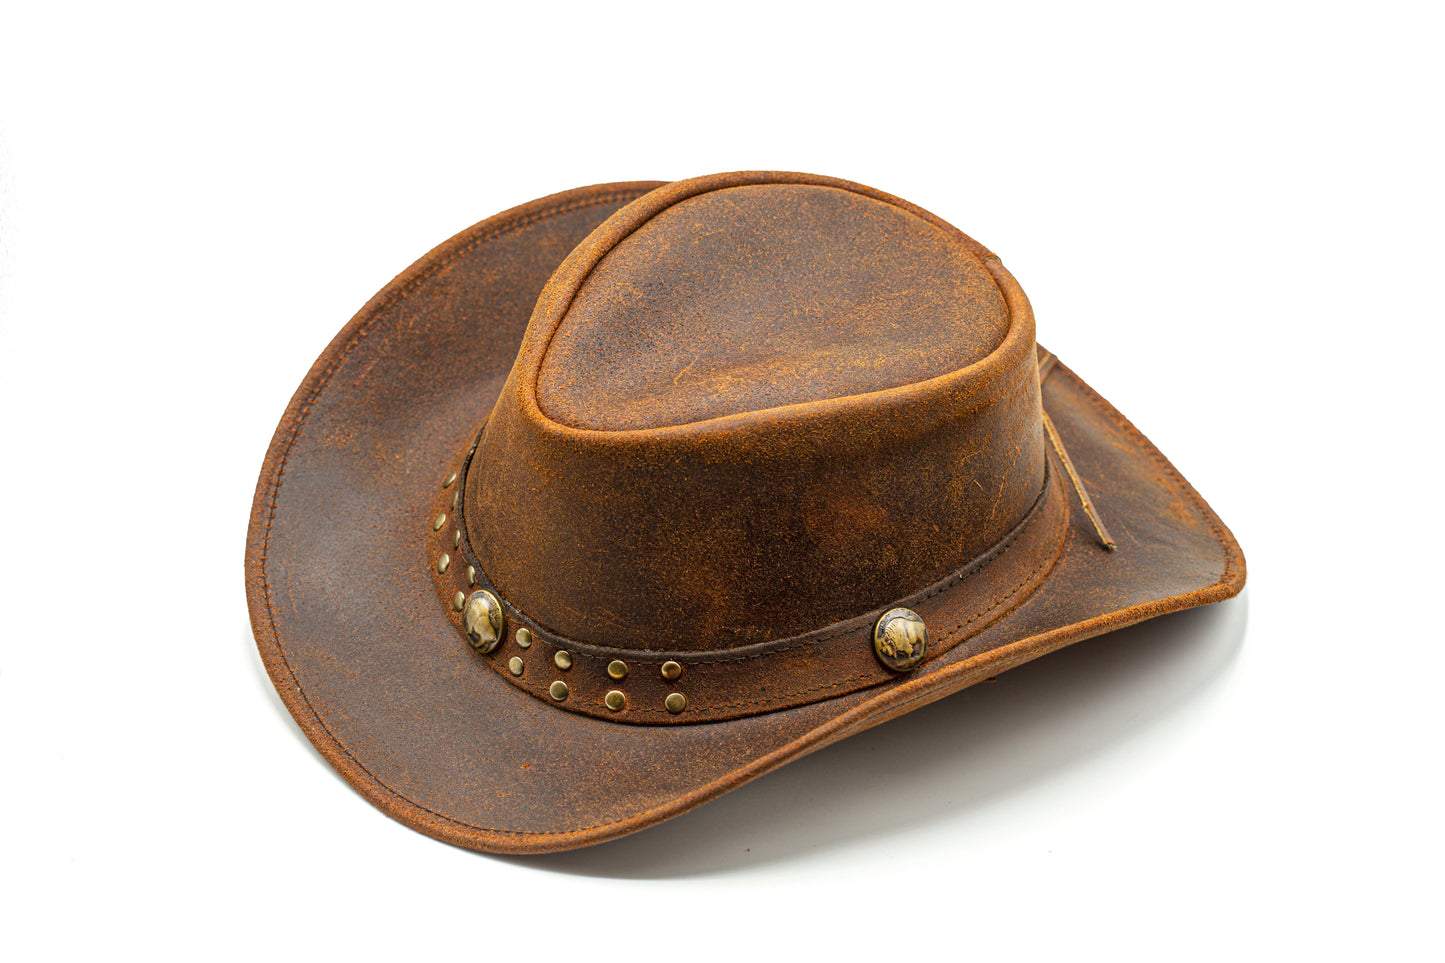 leather cowboy hat western style shapeable as outback best gift for men women him her mom dad boyfriend girlfriend friends 